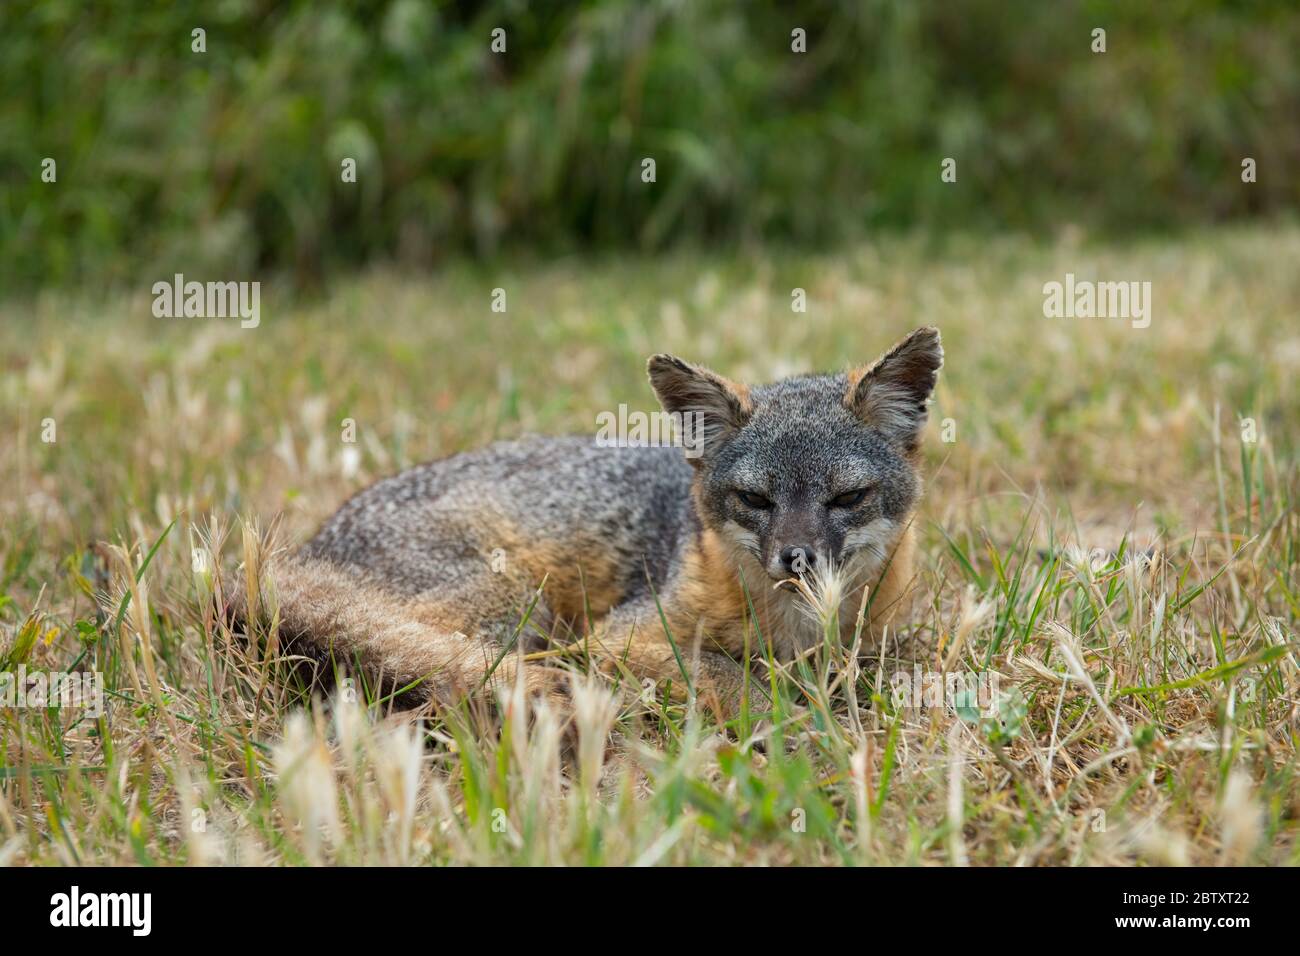 An endemic Santa Cruz Island Fox resting on grass at Santa Cruz Island, Channel Islands, California, USA. Stock Photo